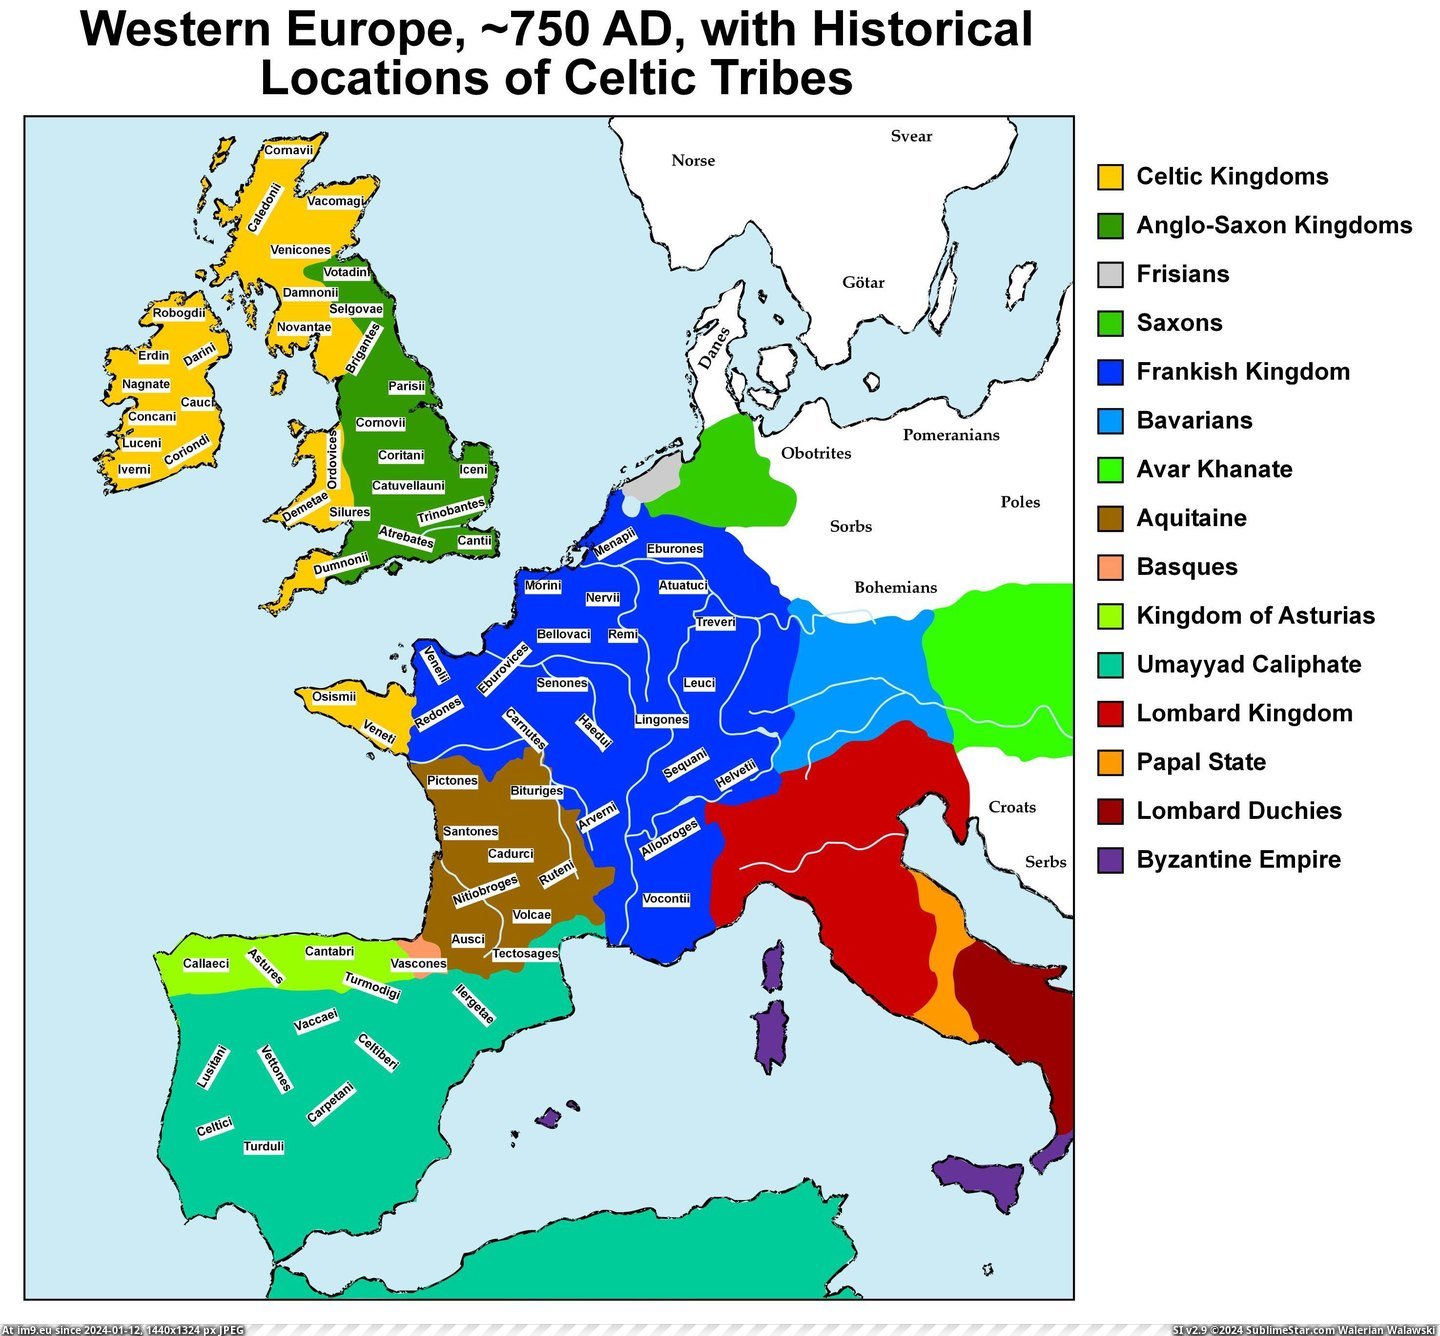 #Europe #Western #Celtic #Tribes #Historical #Locations [Mapporn] Historical locations of Celtic tribes in Western Europe in ~750 AD [2950x2725] Pic. (Bild von album My r/MAPS favs))